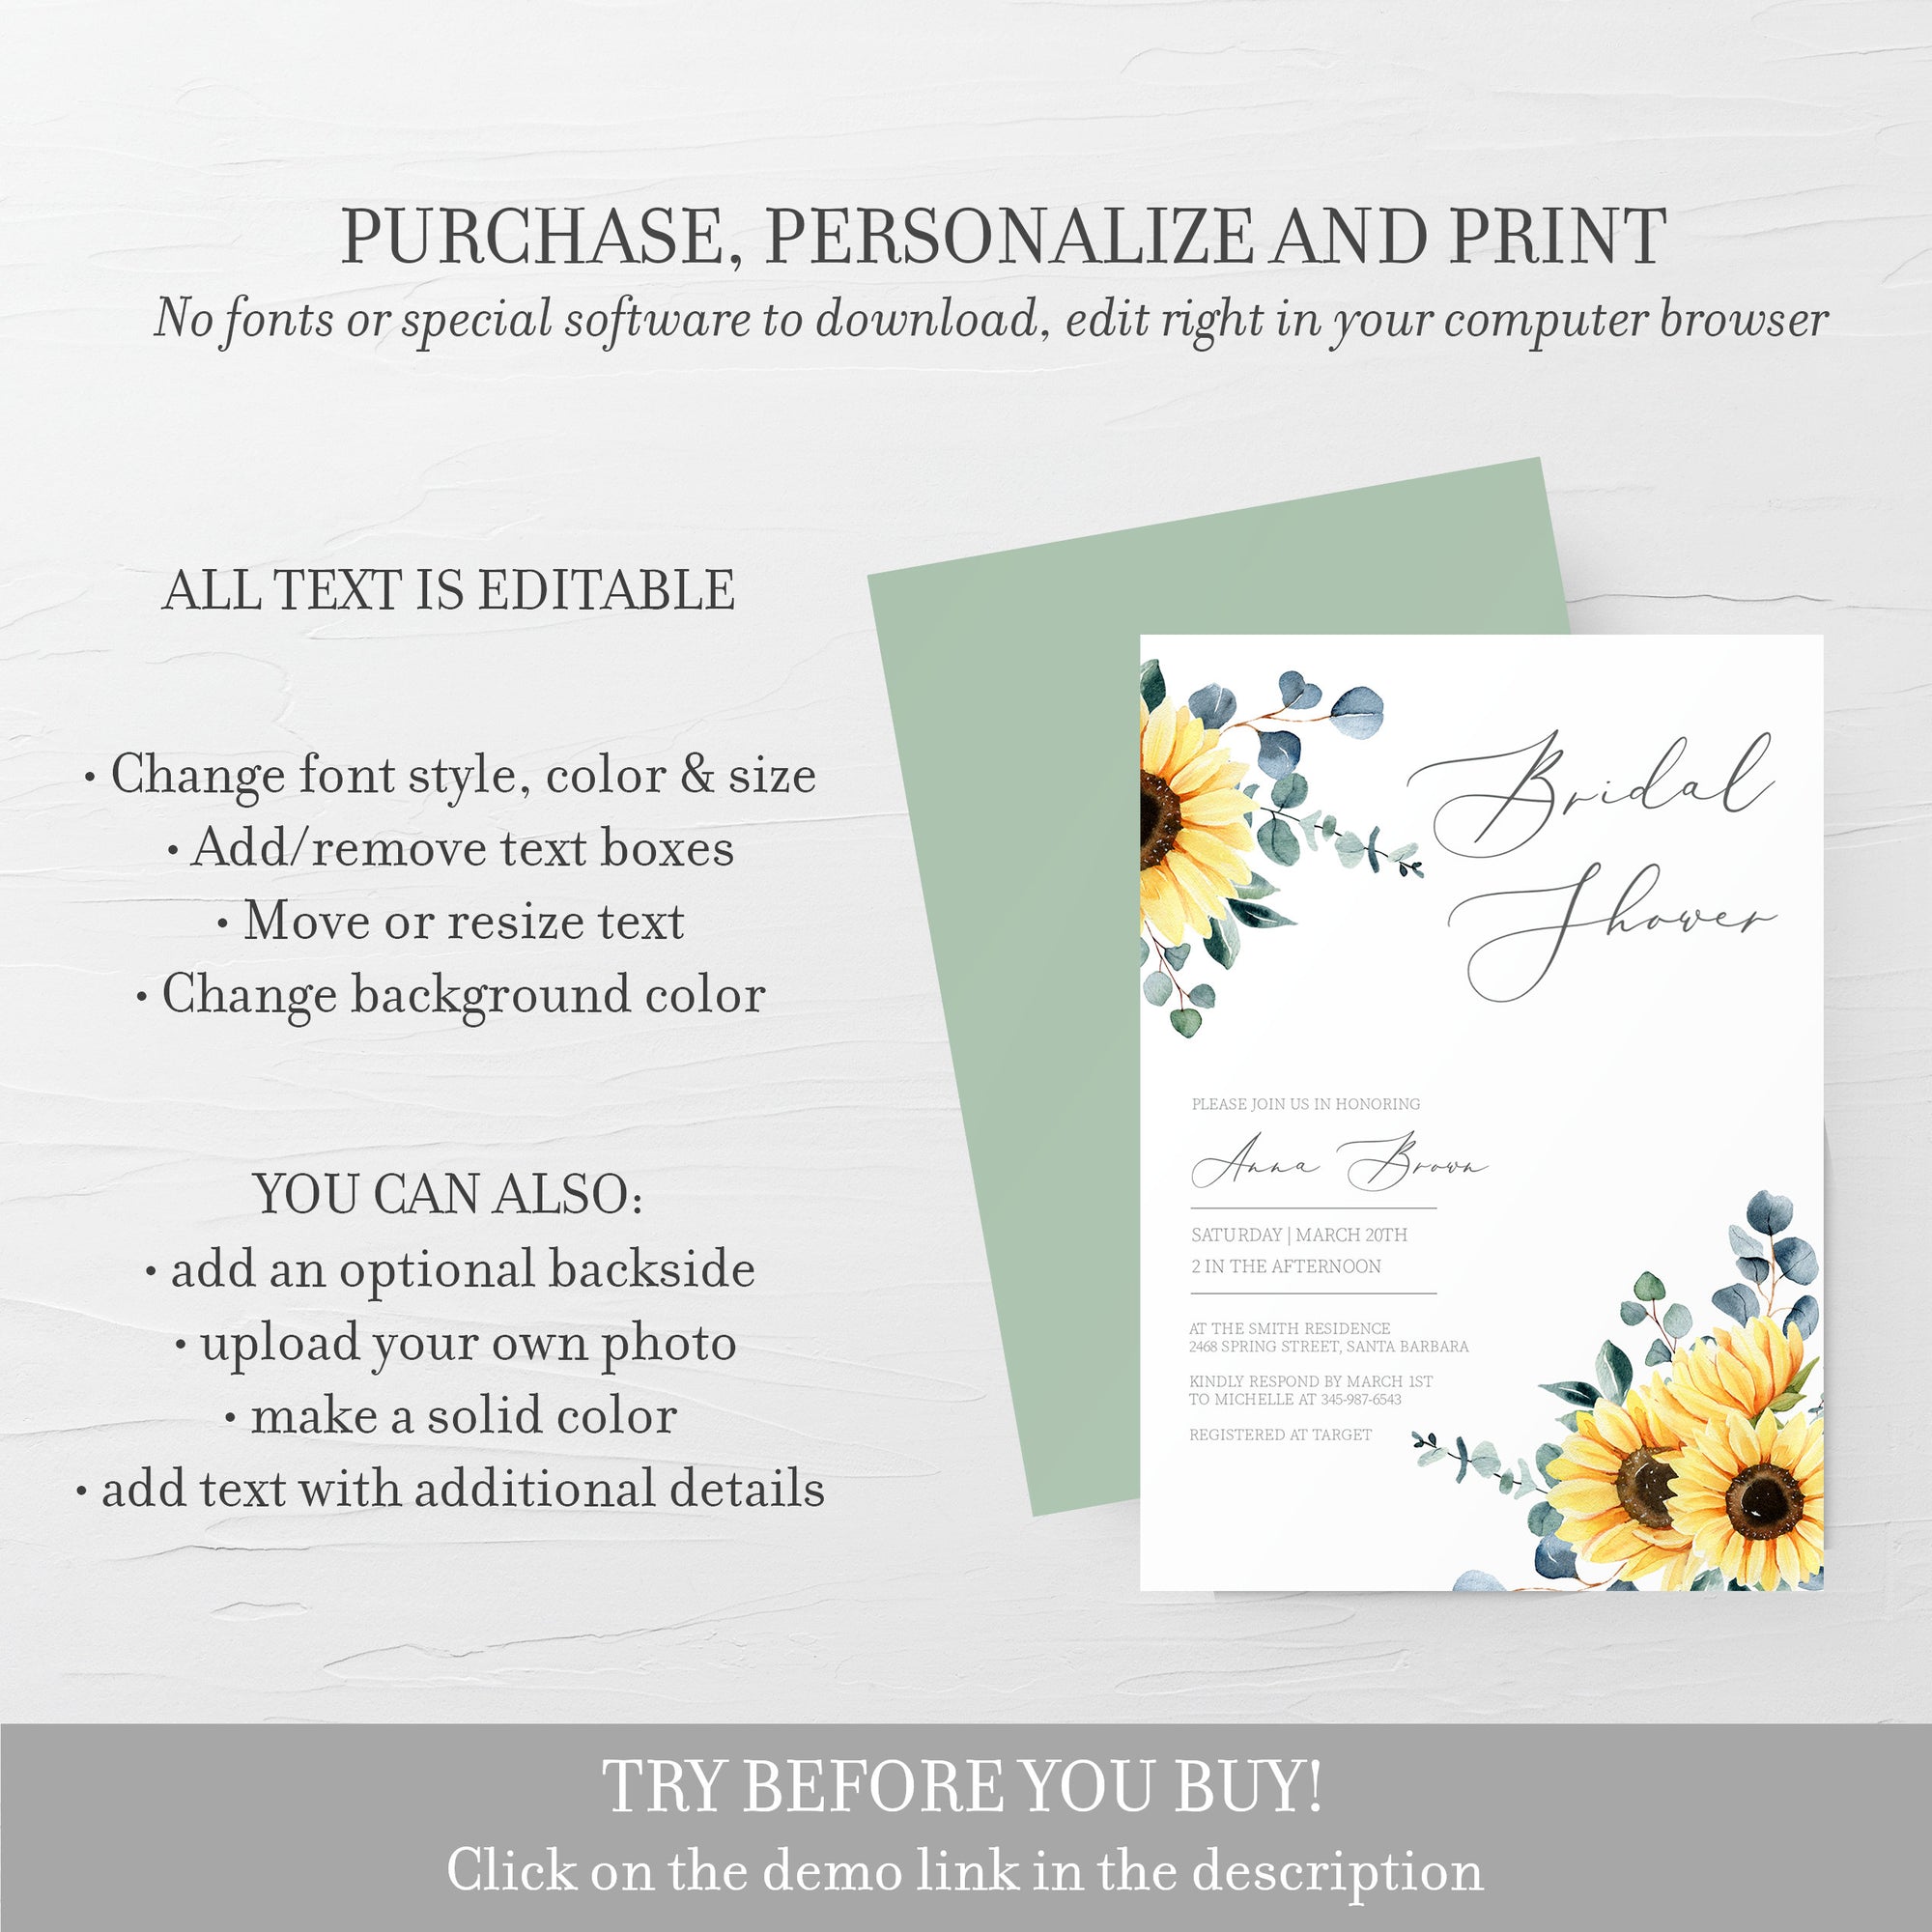 Printable Sunflower Bridal Shower Invitation Template, Editable Sunflower Wedding Shower Invite, DIGITAL DOWNLOAD - S100